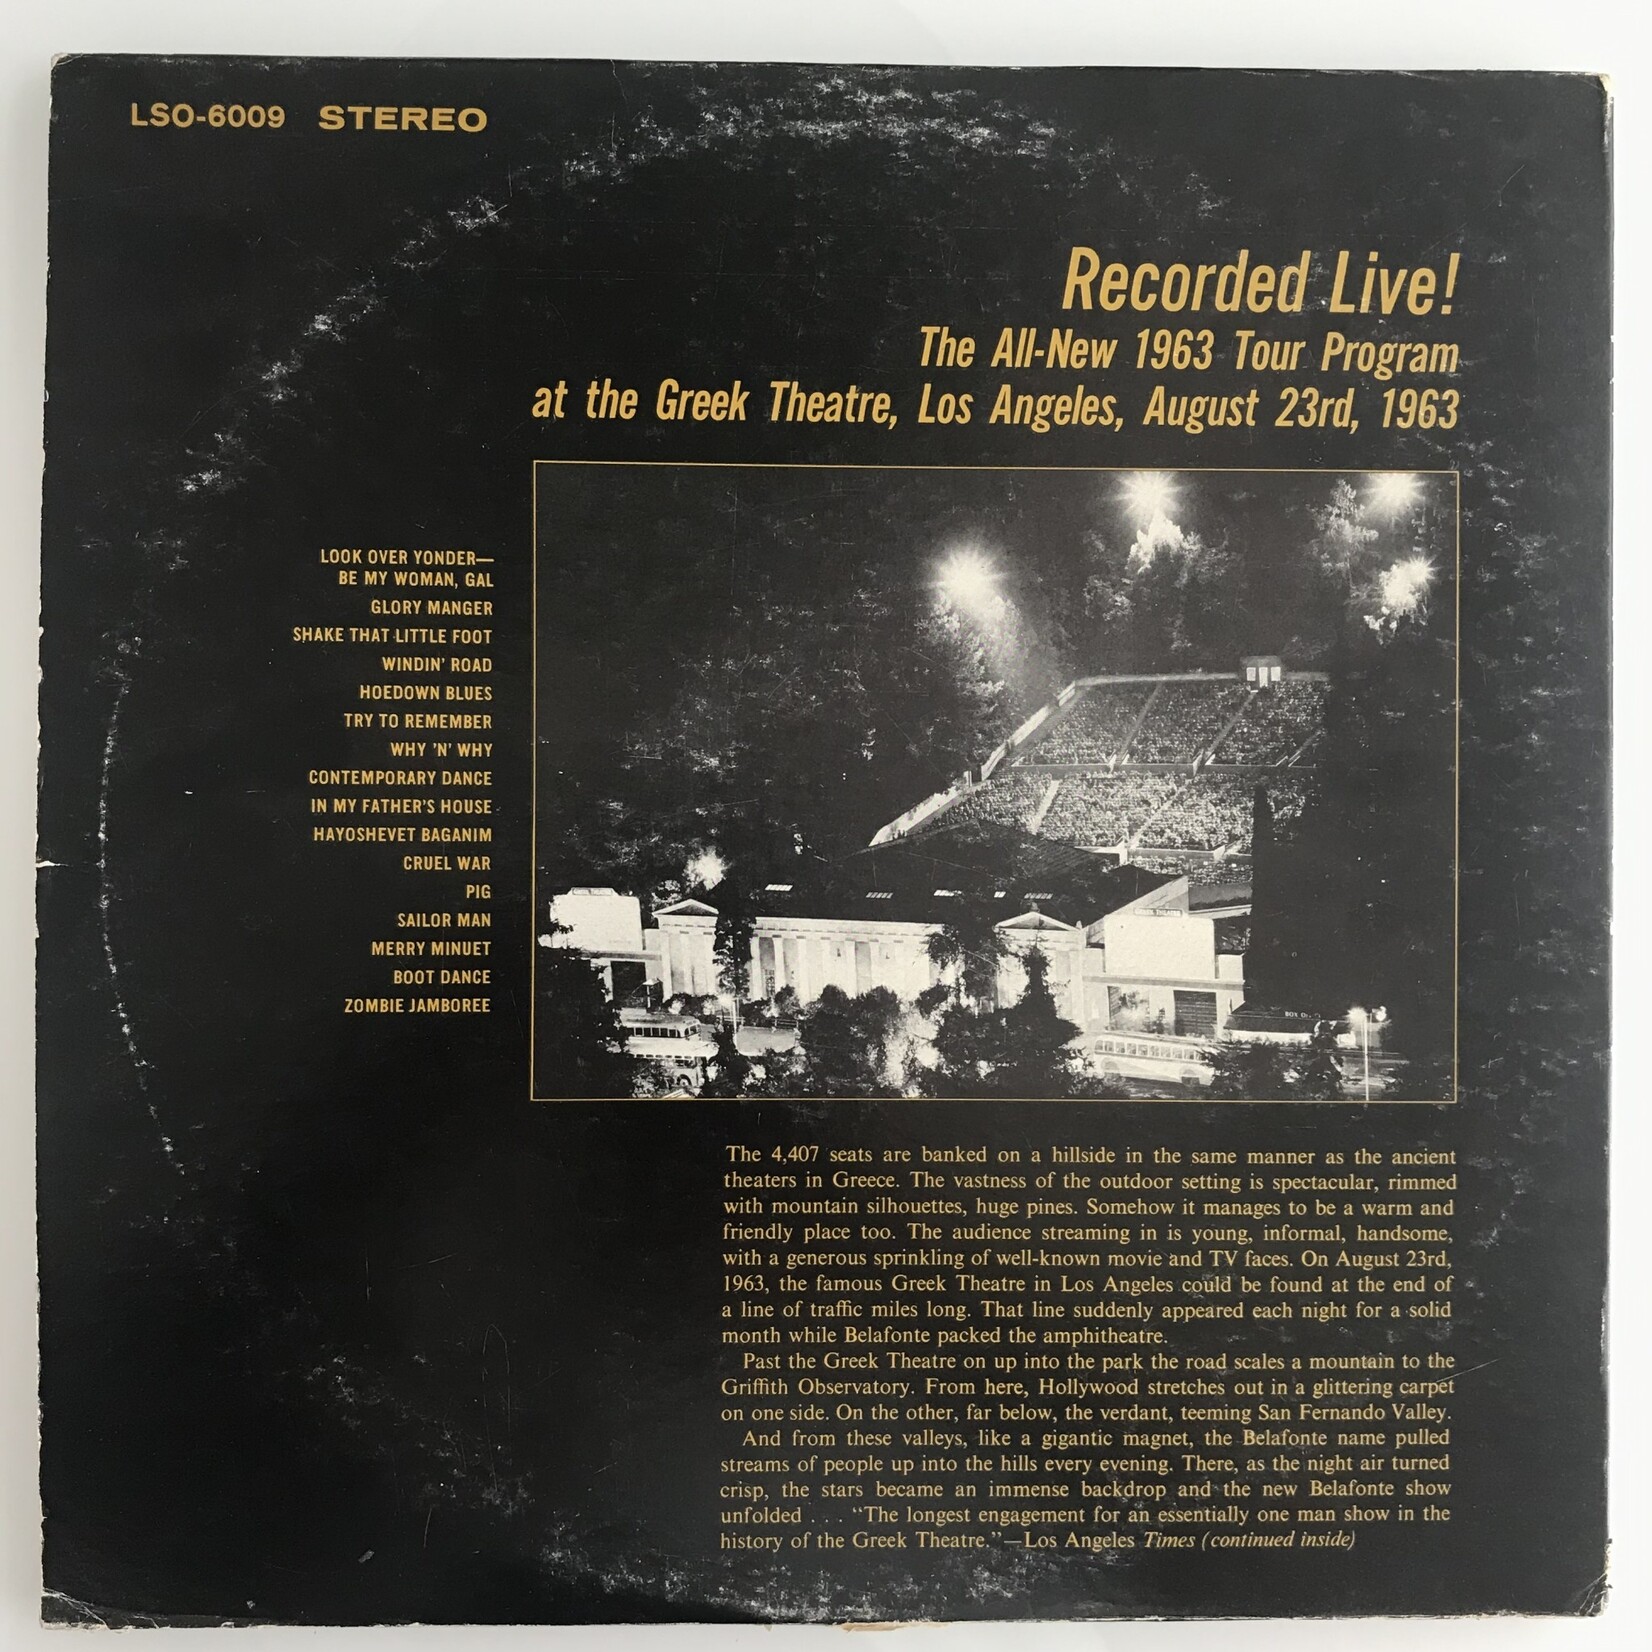 Harry Belafonte - Belafonte At The Greek Theatre - Vinyl LP (USED)